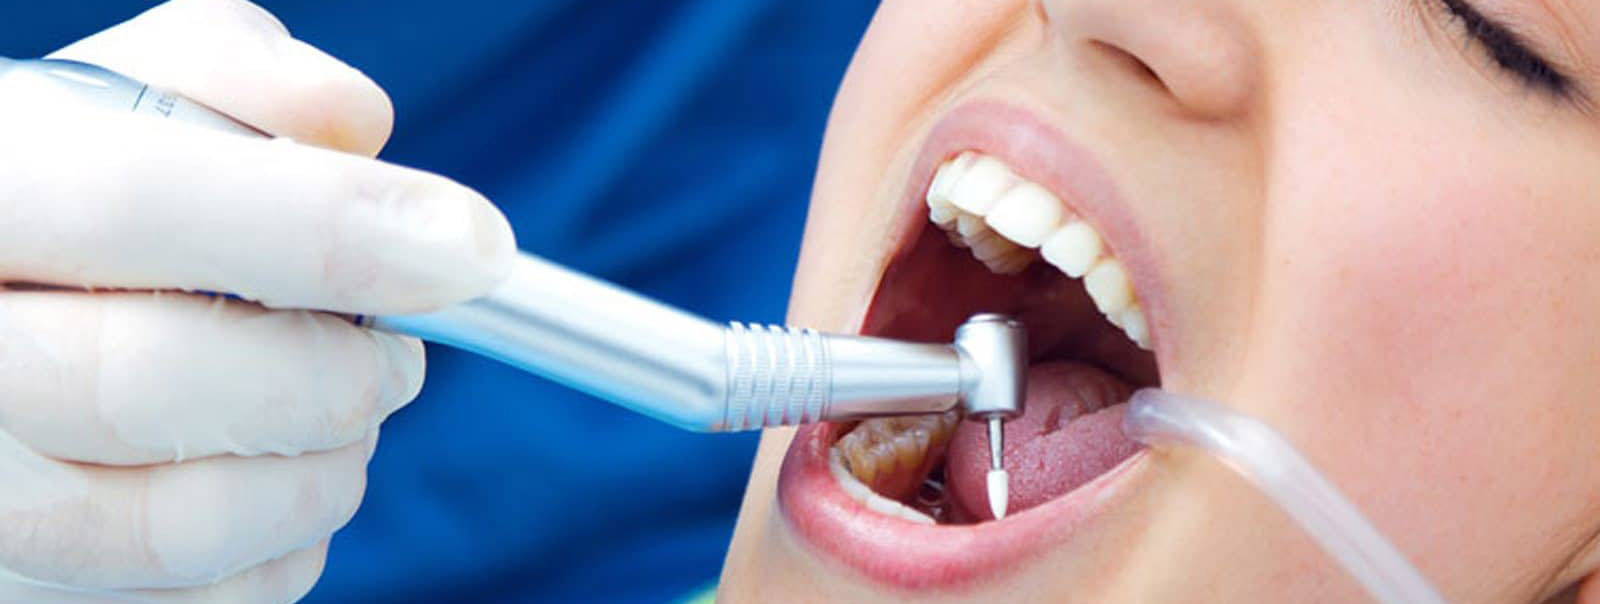 broken tooth dentist treatment kallangur